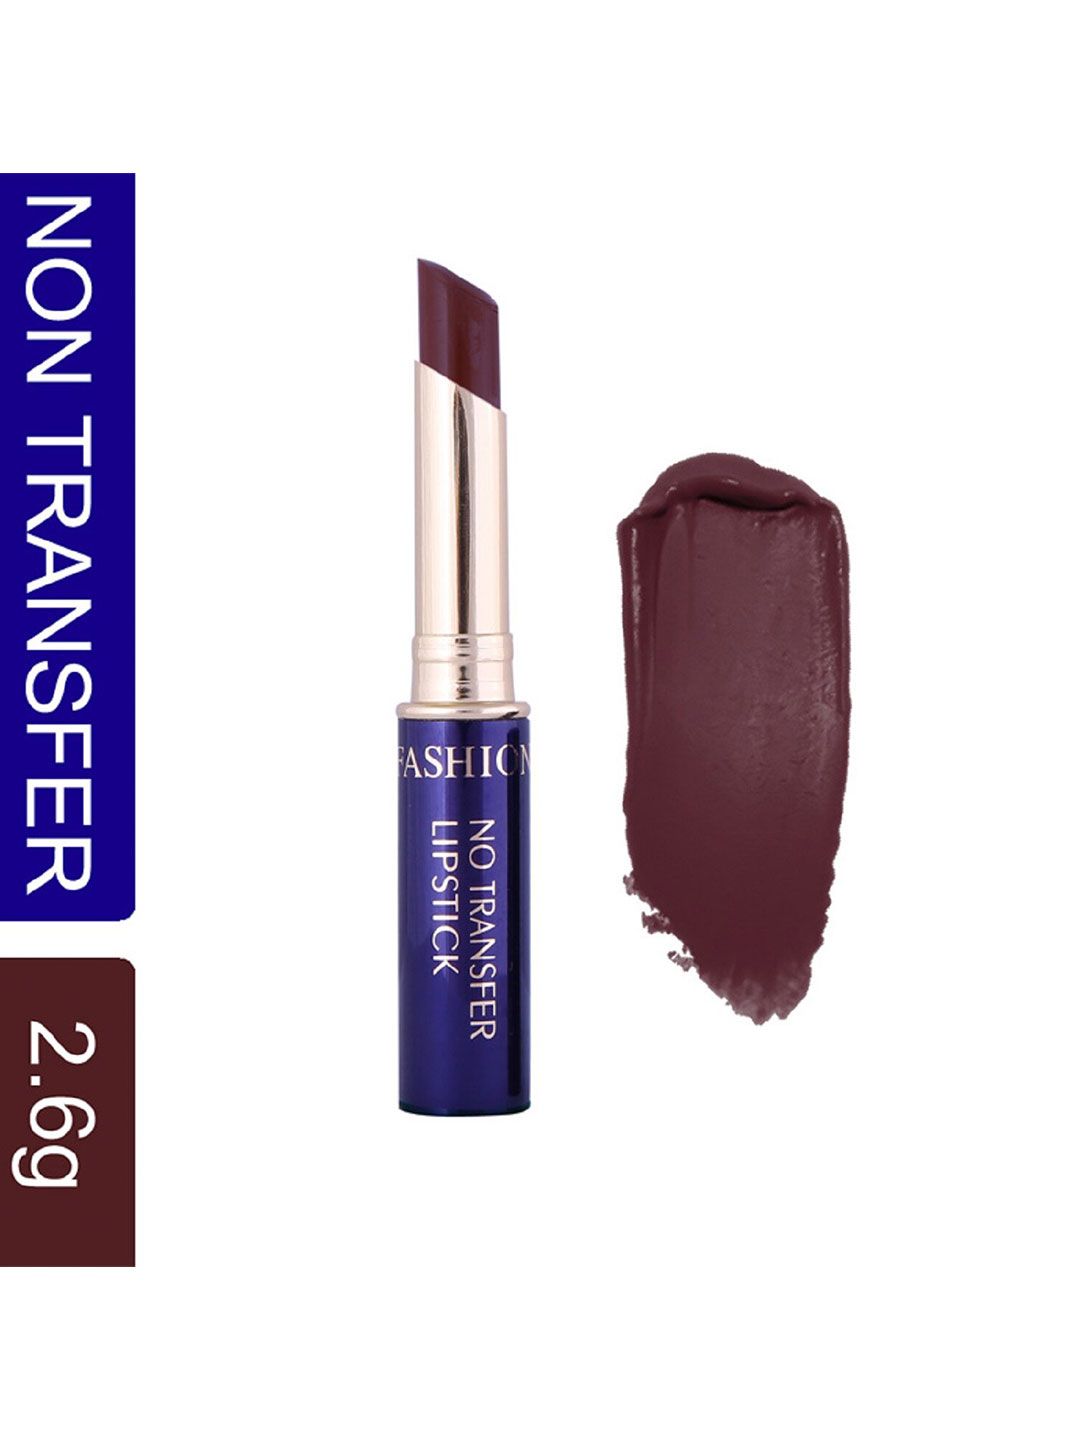 Fashion Colour No Transfer Matte Waterproof Lipstick 2.6 g - Chestnut 47 Price in India